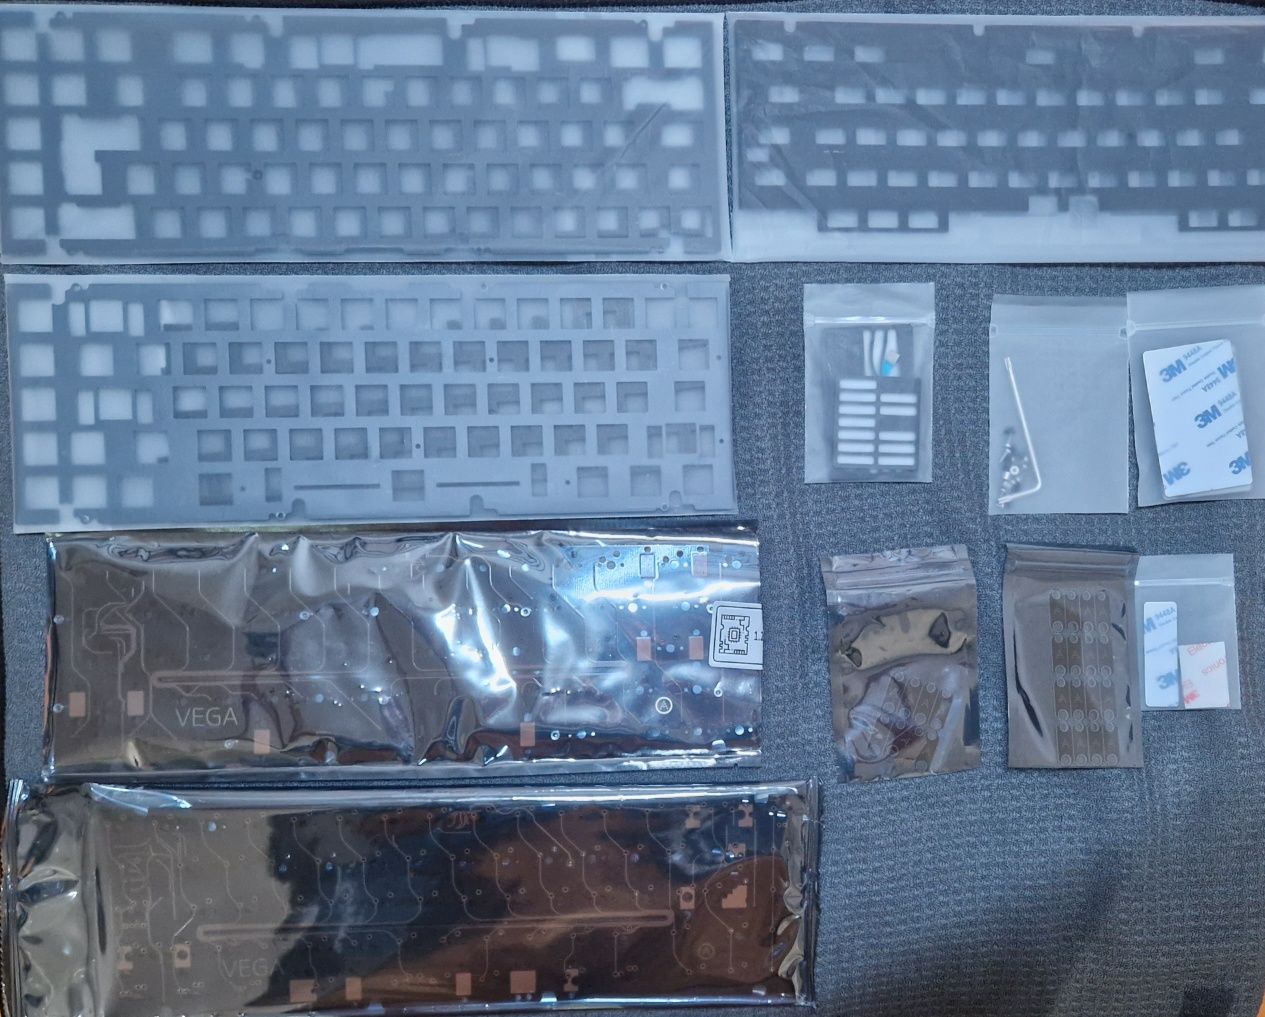 Tastatura mecanica custom ai03 Vega cu extras